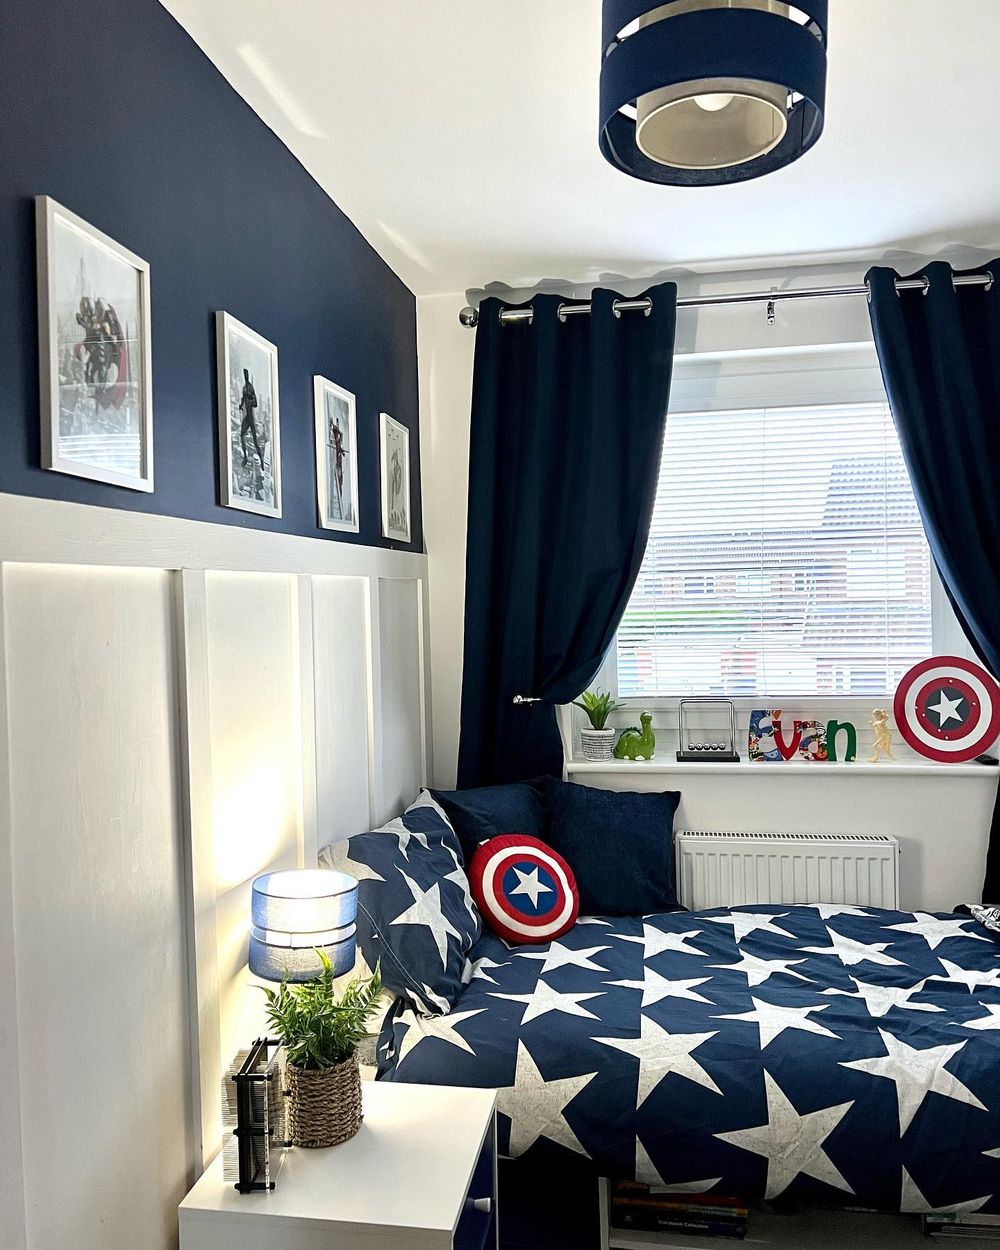 Boys bedroom decor Navy blue color theme home_at_cedar1